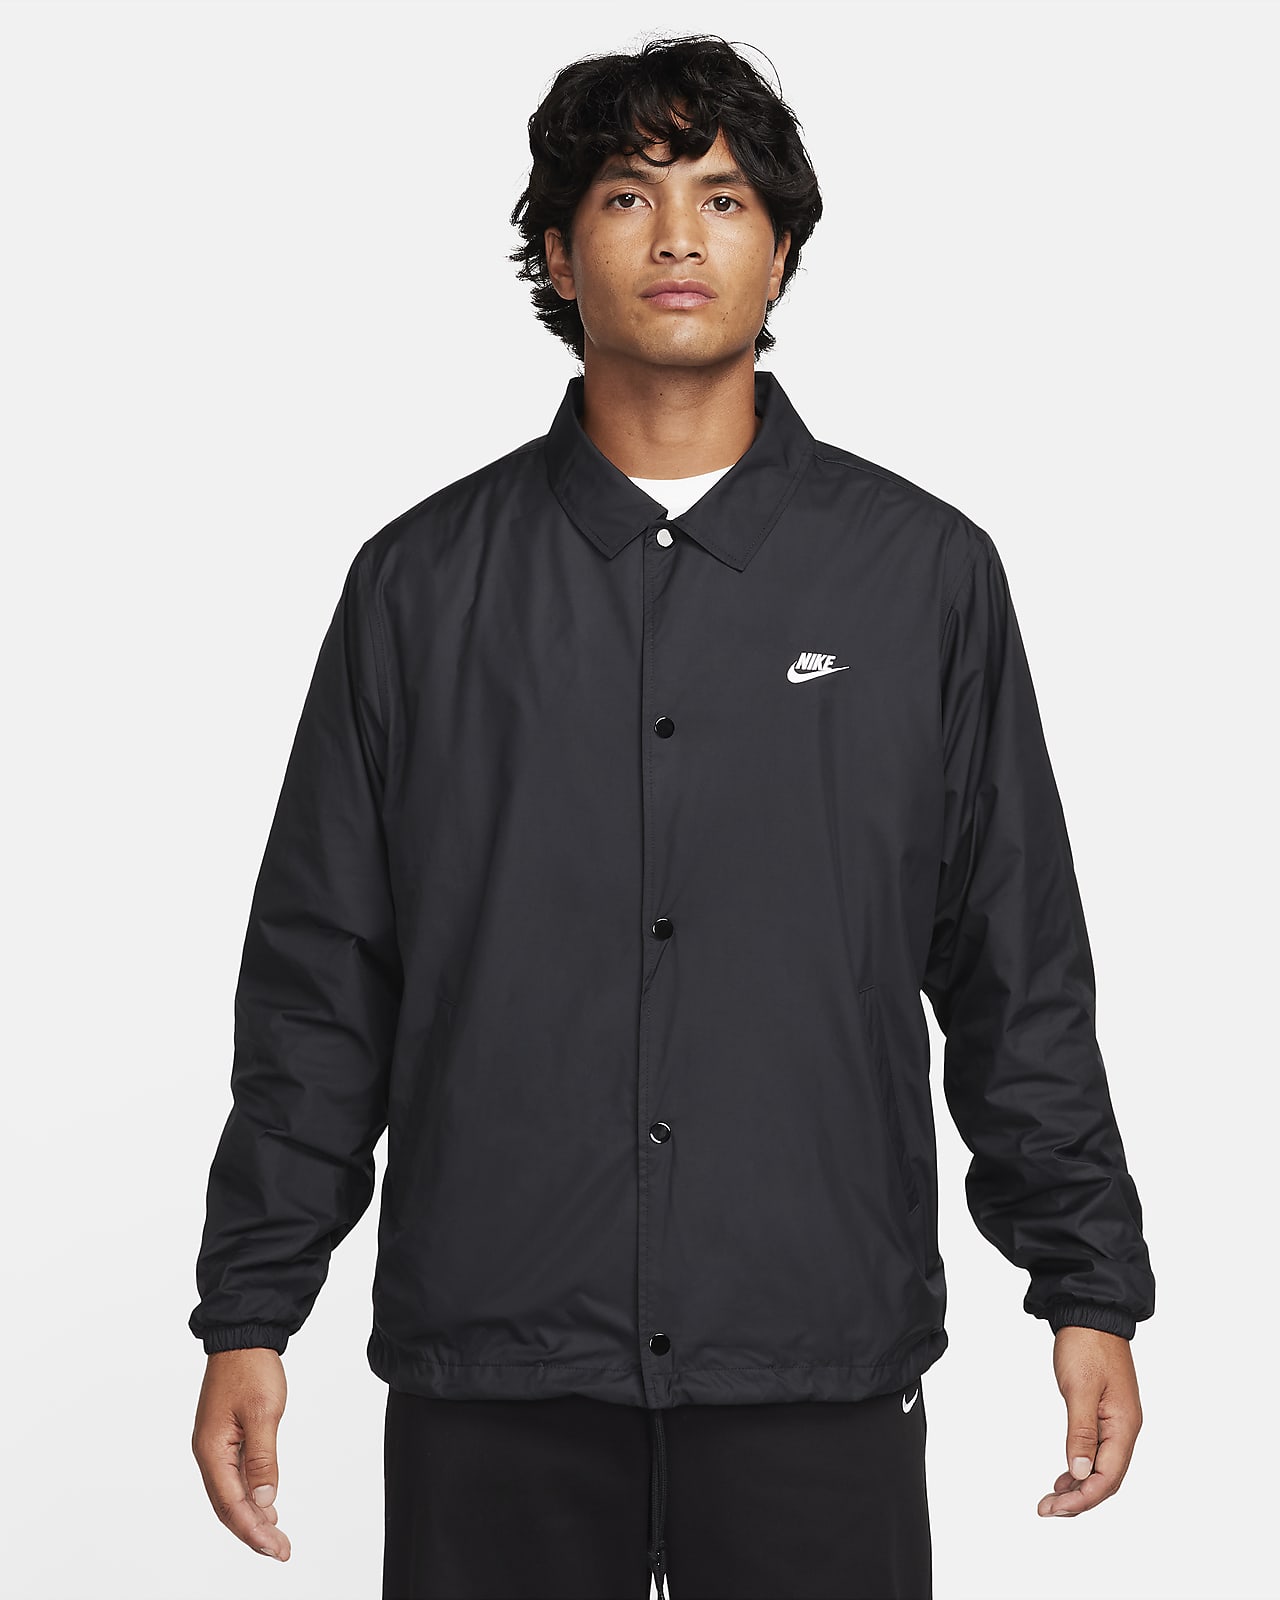 Coach jacket Nike Club – Uomo